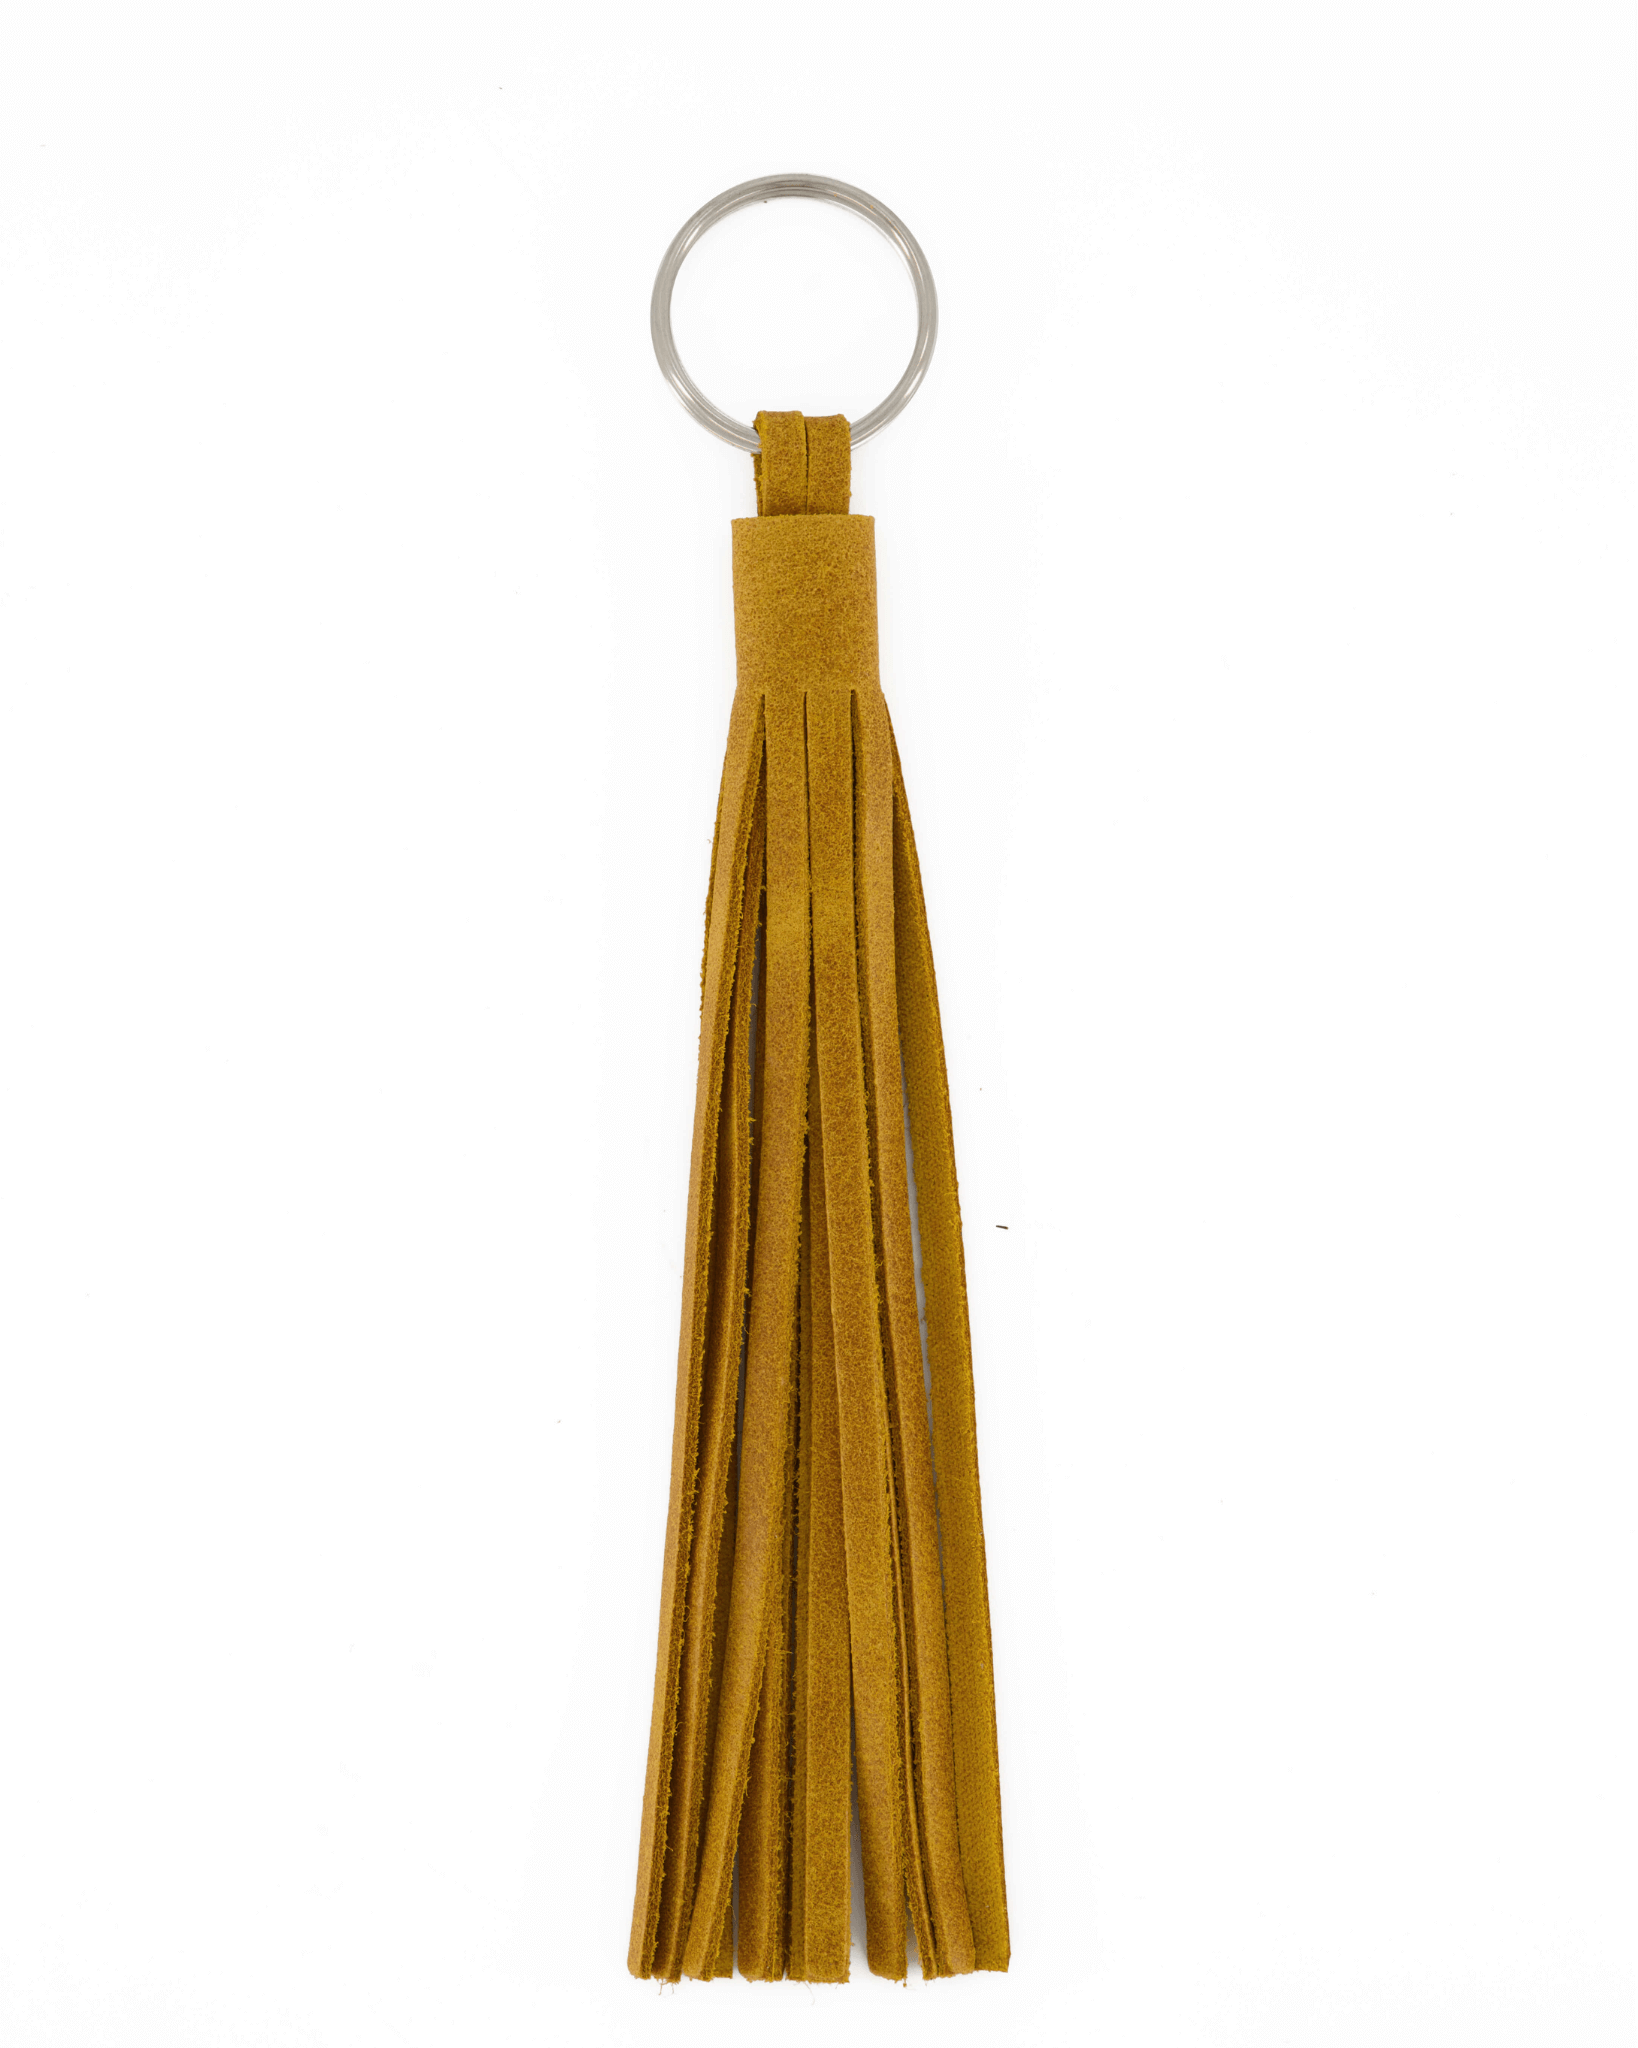 KNÖLIG key ring, small yellow - IKEA